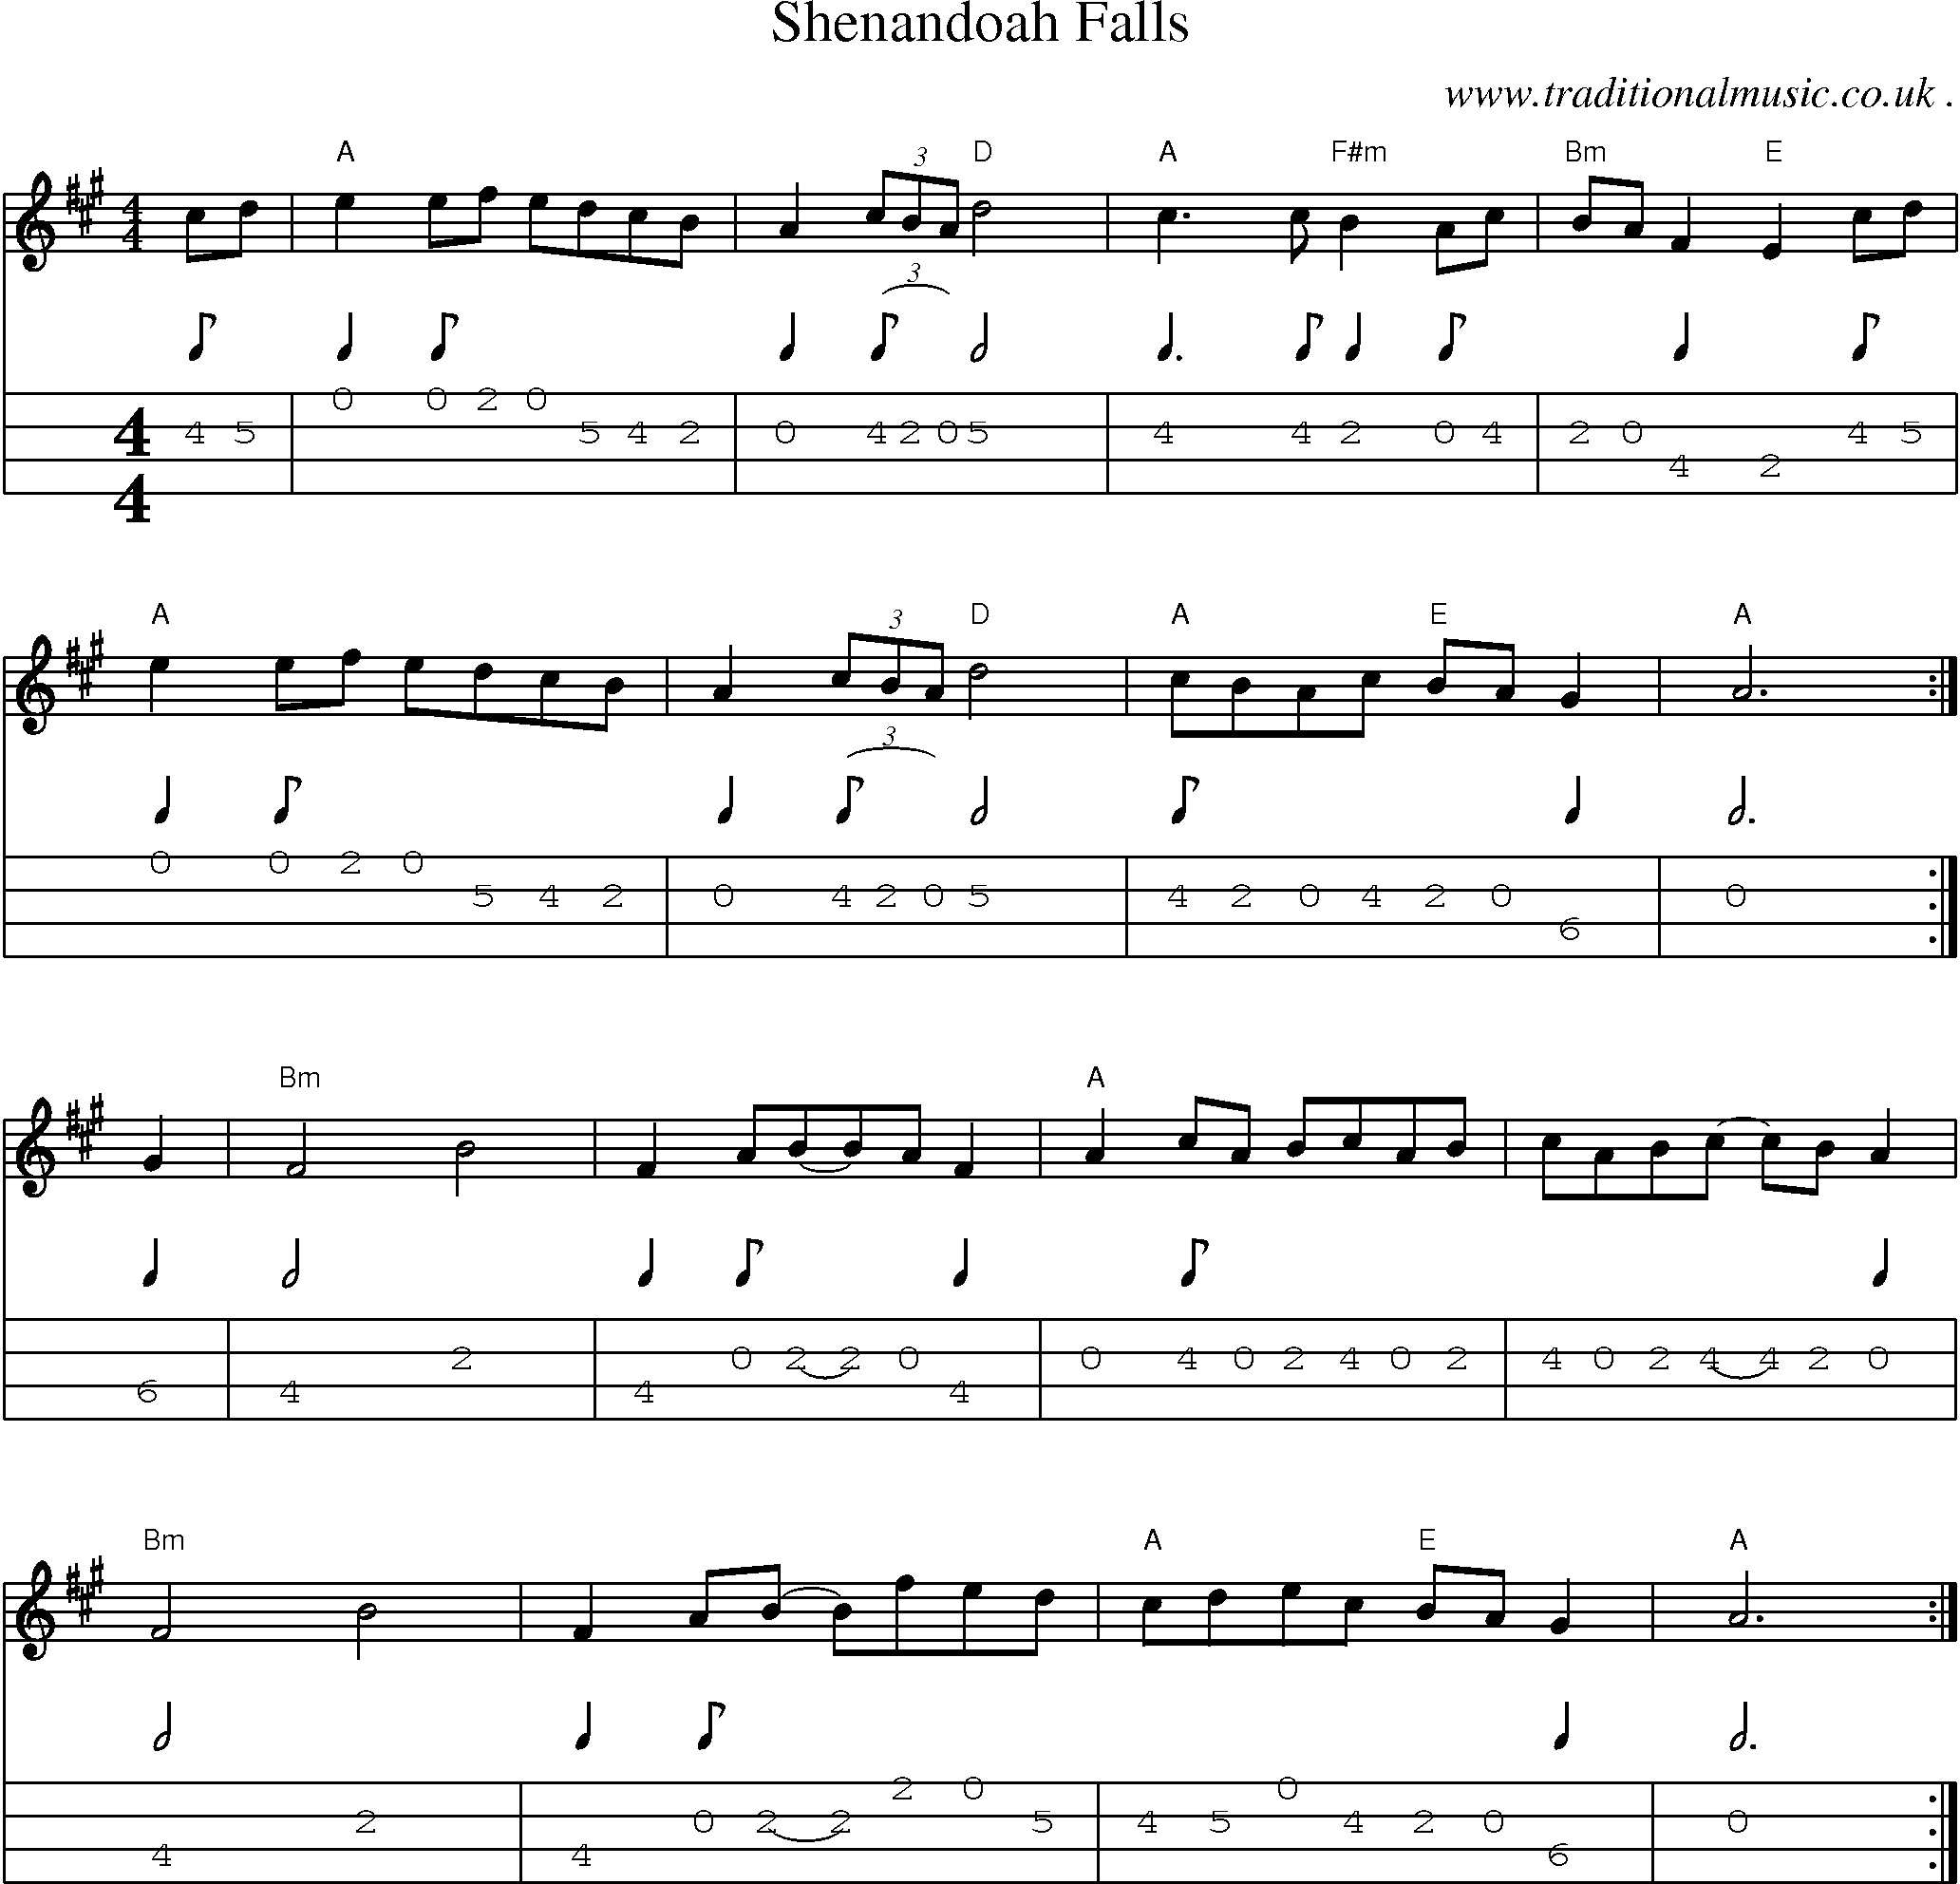 Music Score and Mandolin Tabs for Shenandoah Falls